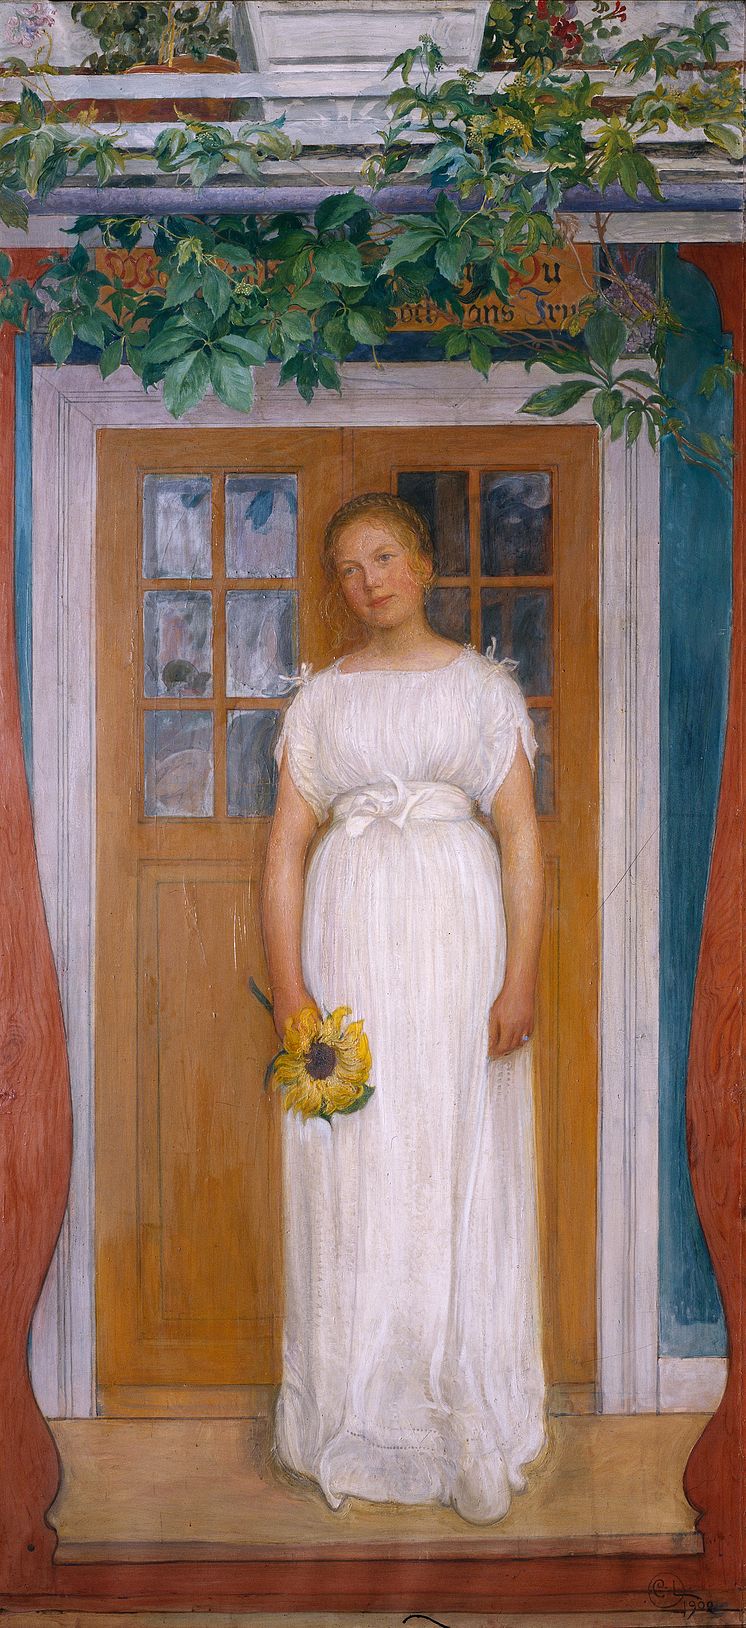 Carl Larsson, Sjutton år, 1902.tiff